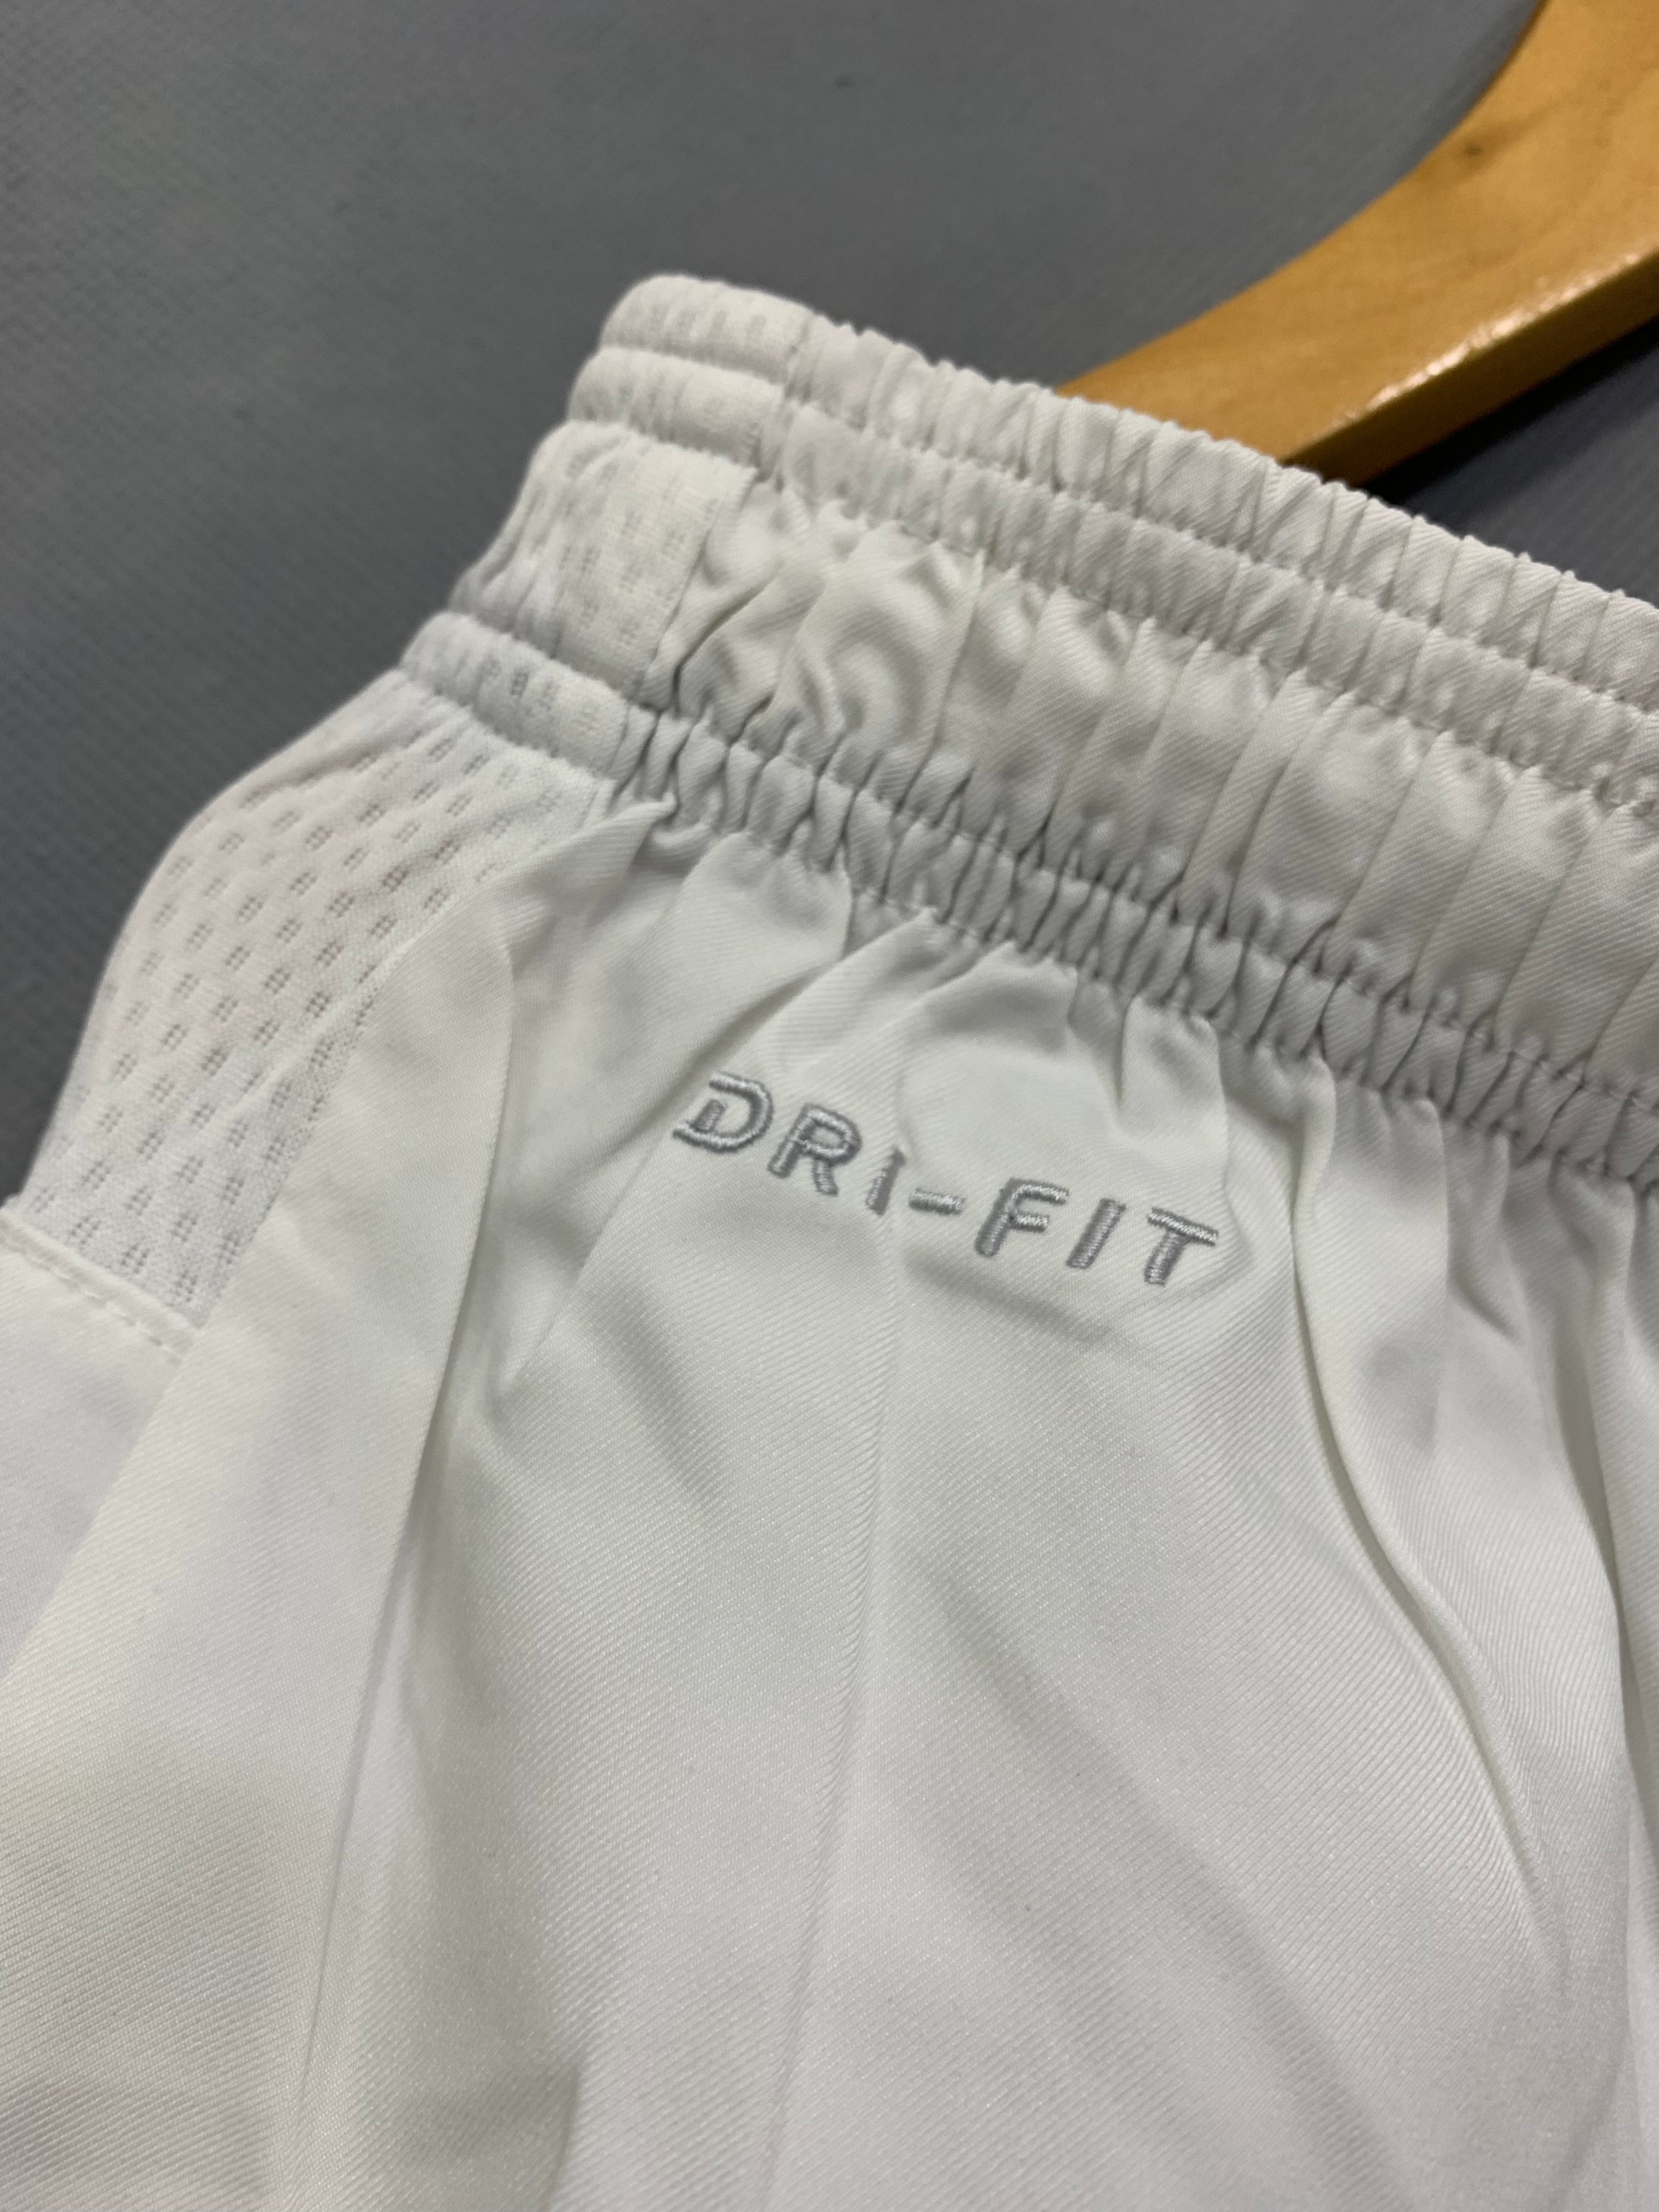 Nike Dri Fit Branded Original Sports Short For Men